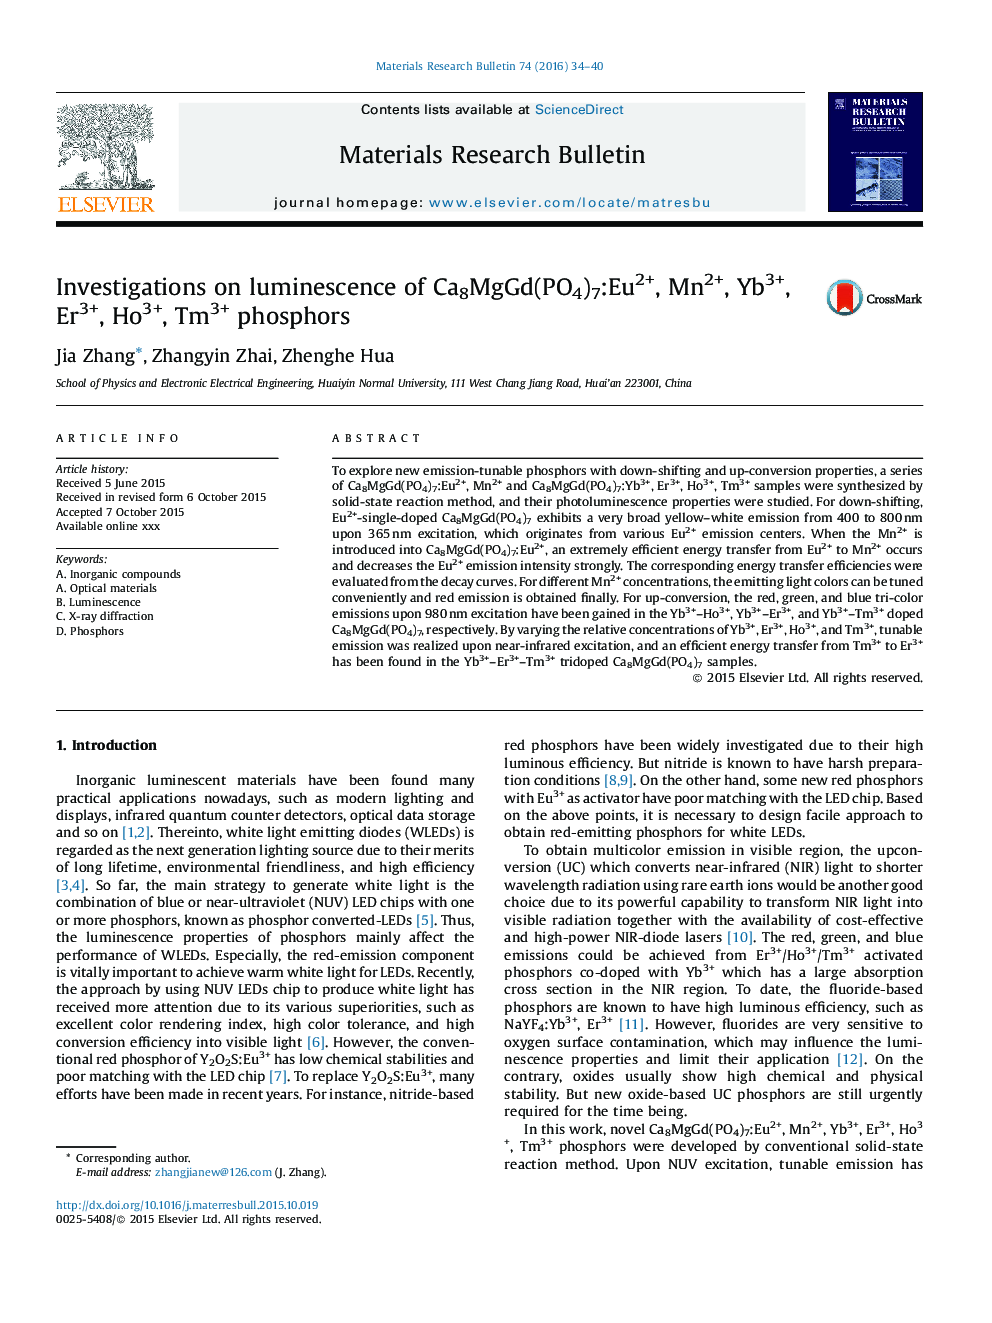 Investigations on luminescence of Ca8MgGd(PO4)7:Eu2+, Mn2+, Yb3+, Er3+, Ho3+, Tm3+ phosphors